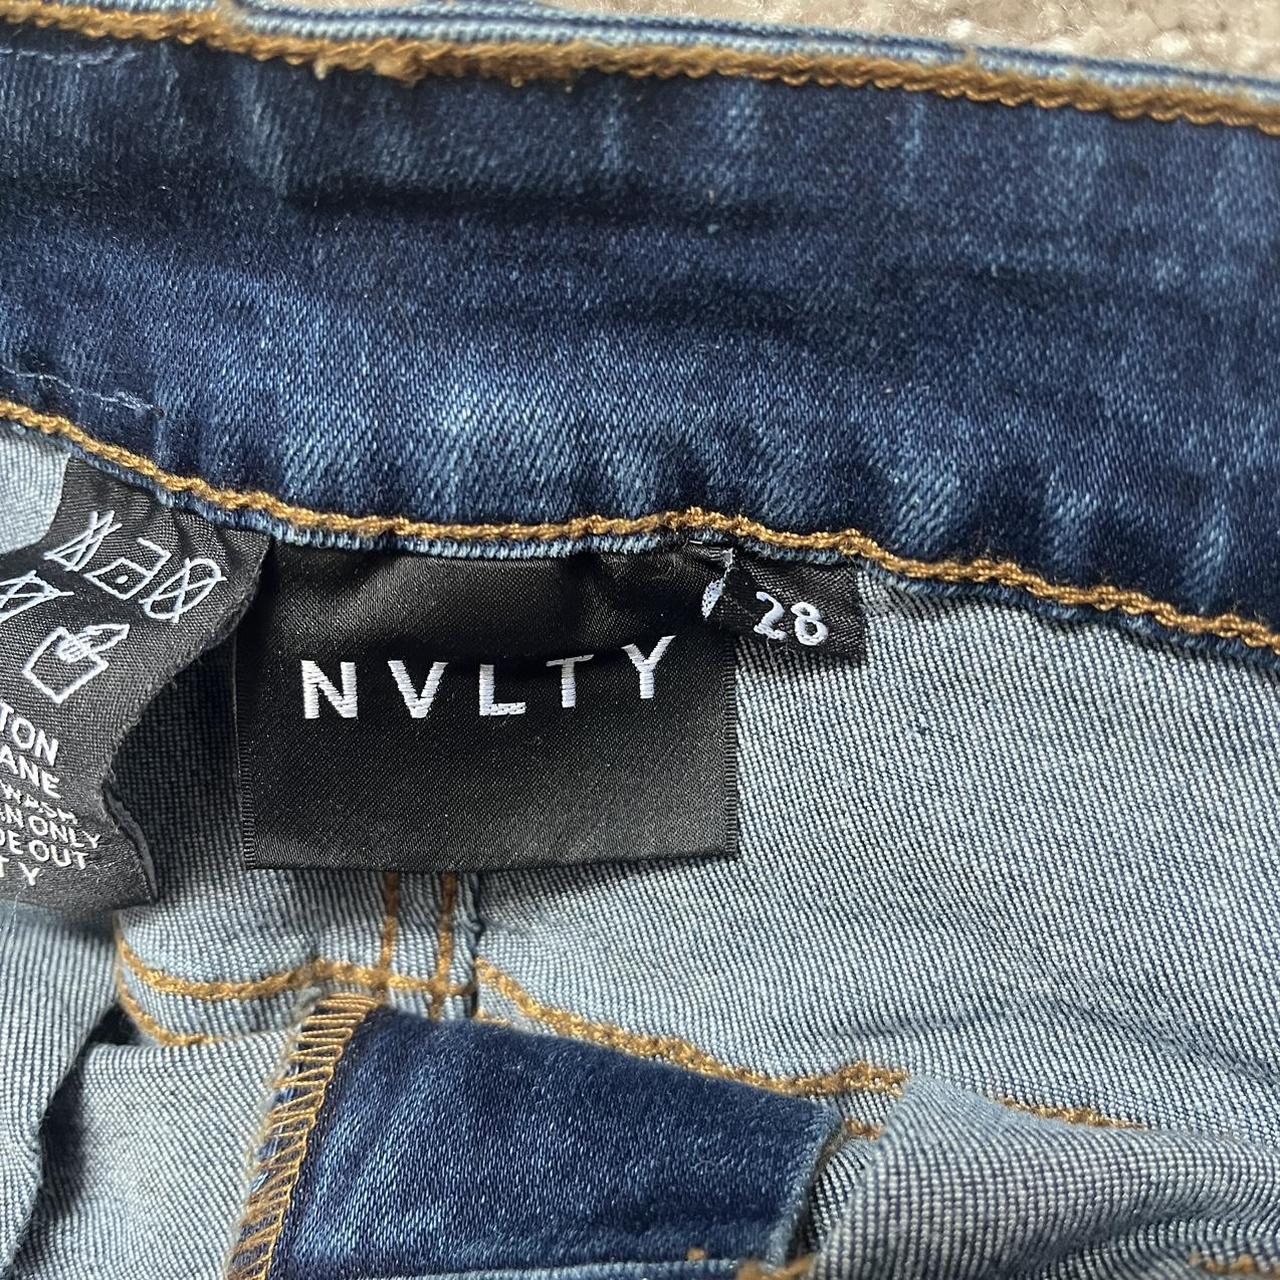 NVLTY Paint Splatter Skinny Jeans in Navy Size... - Depop